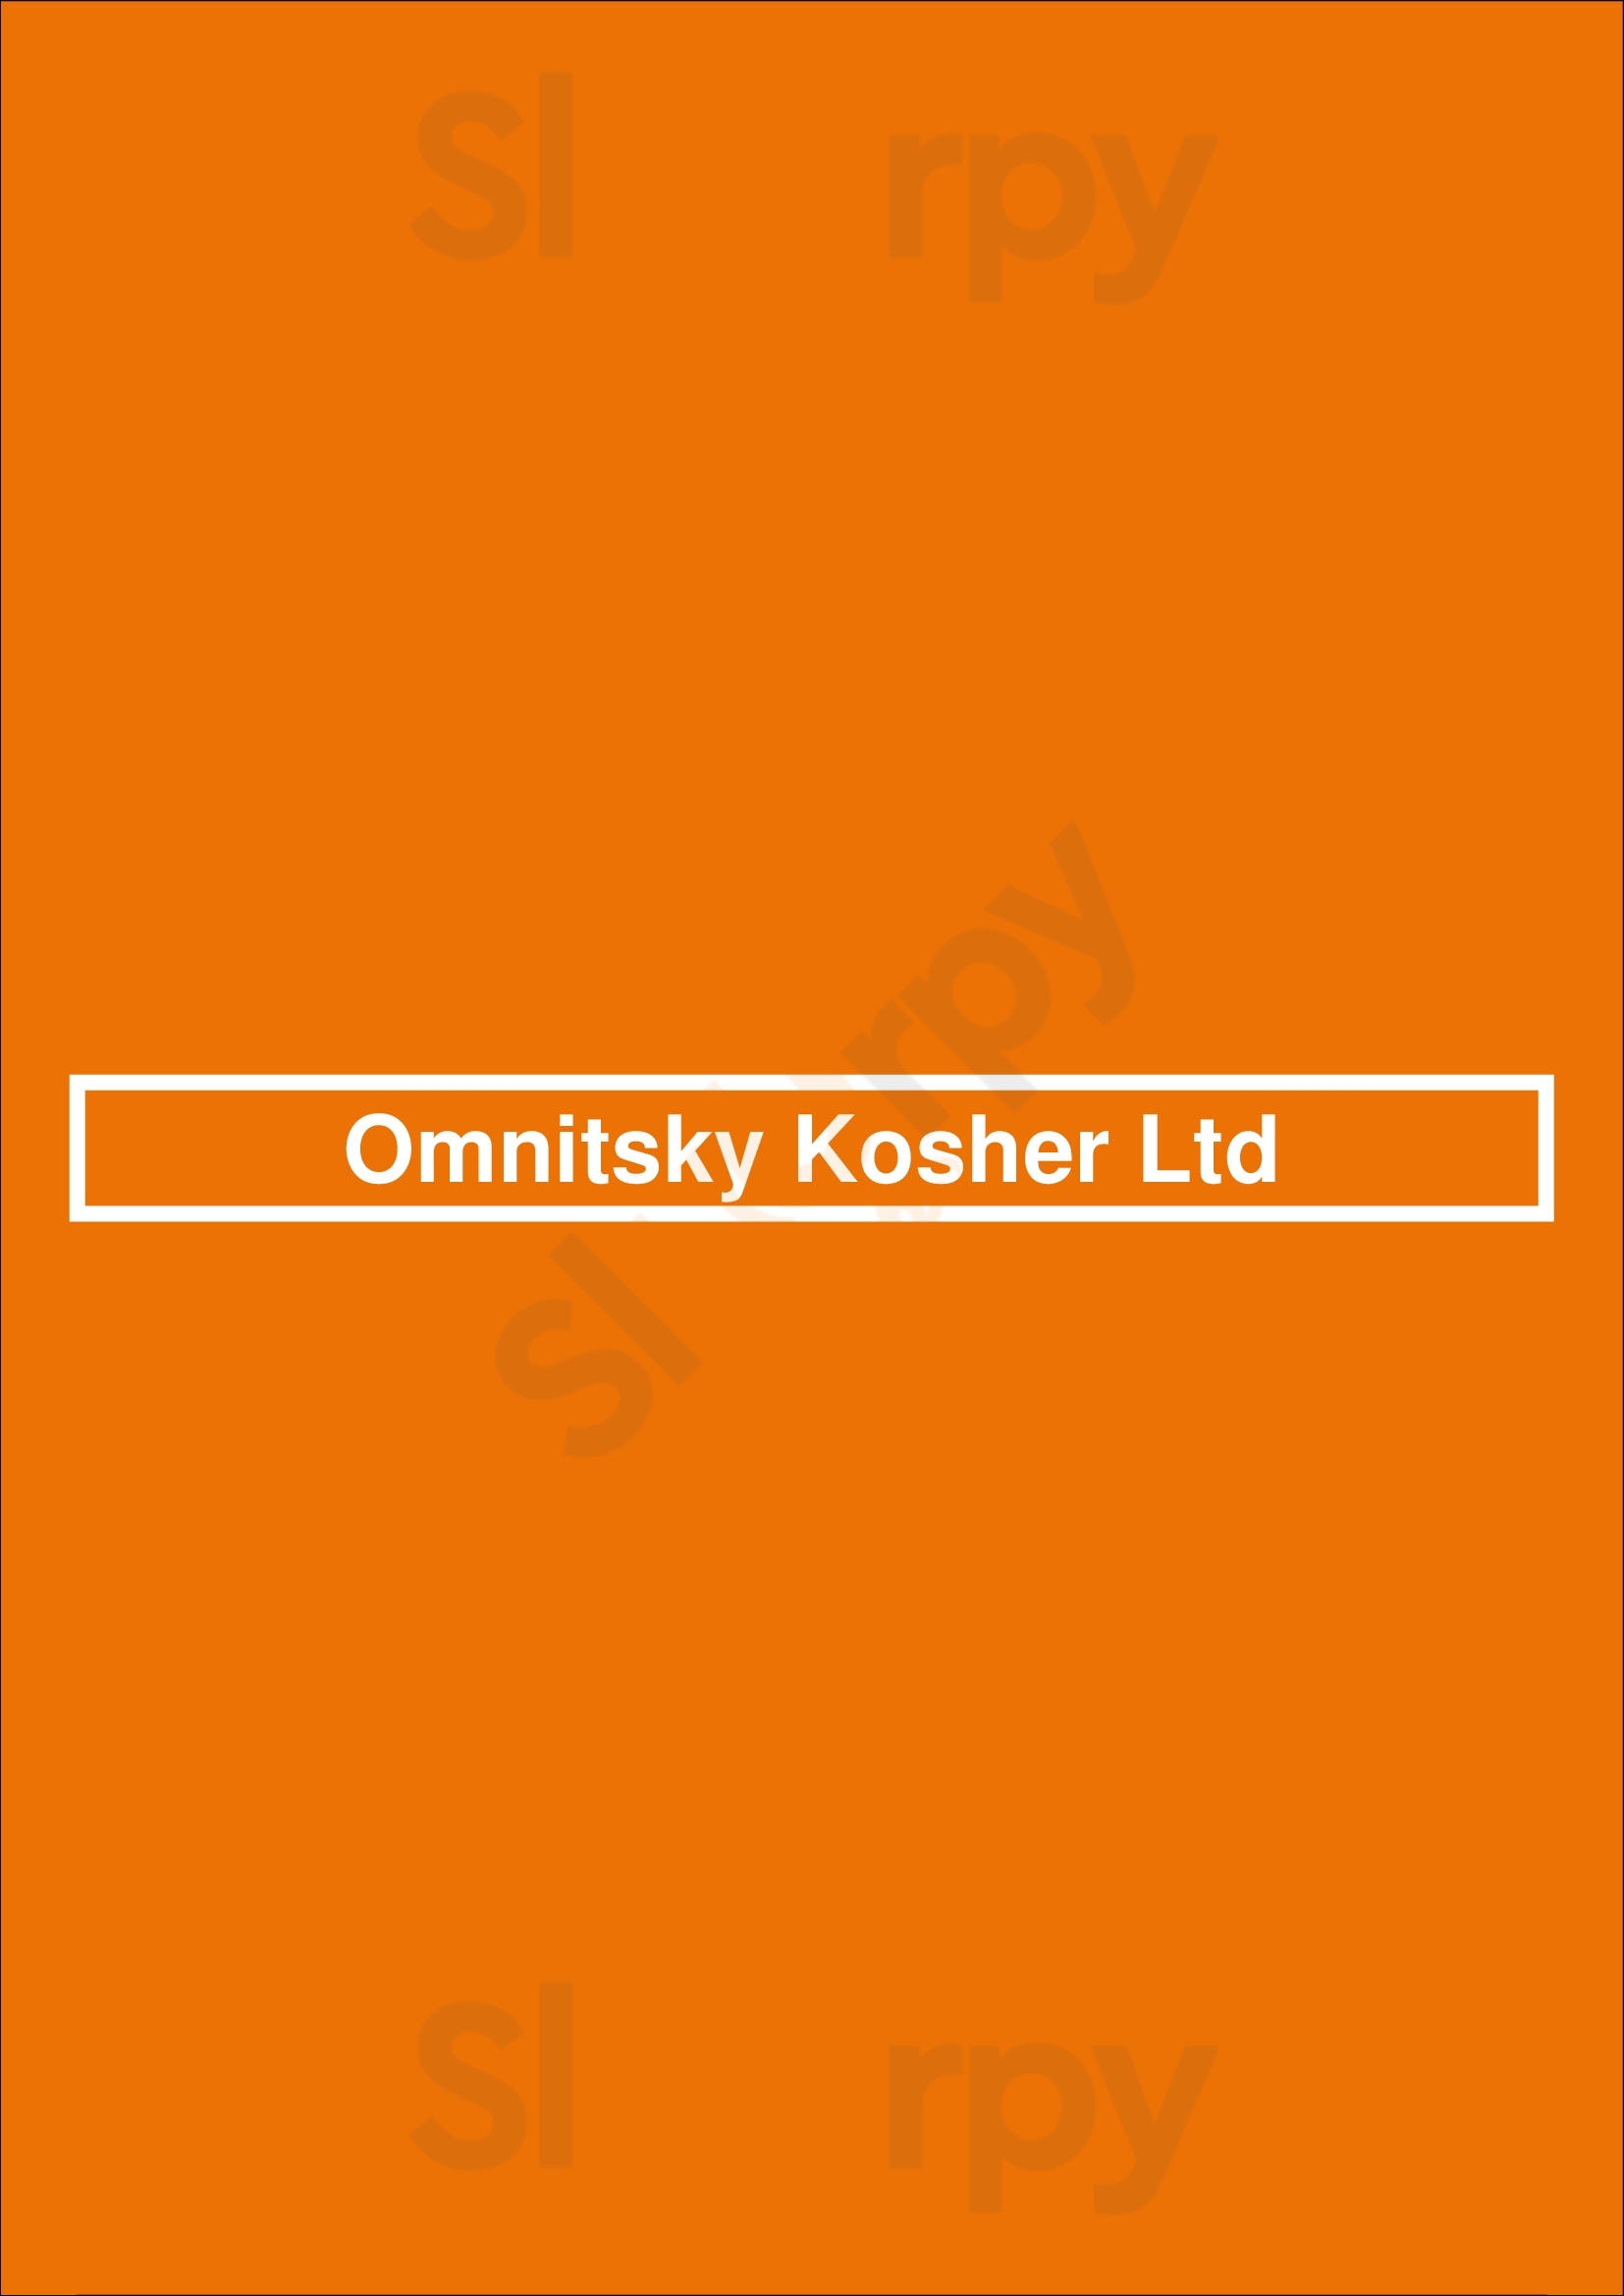 Omnitsky Kosher Ltd Vancouver Menu - 1